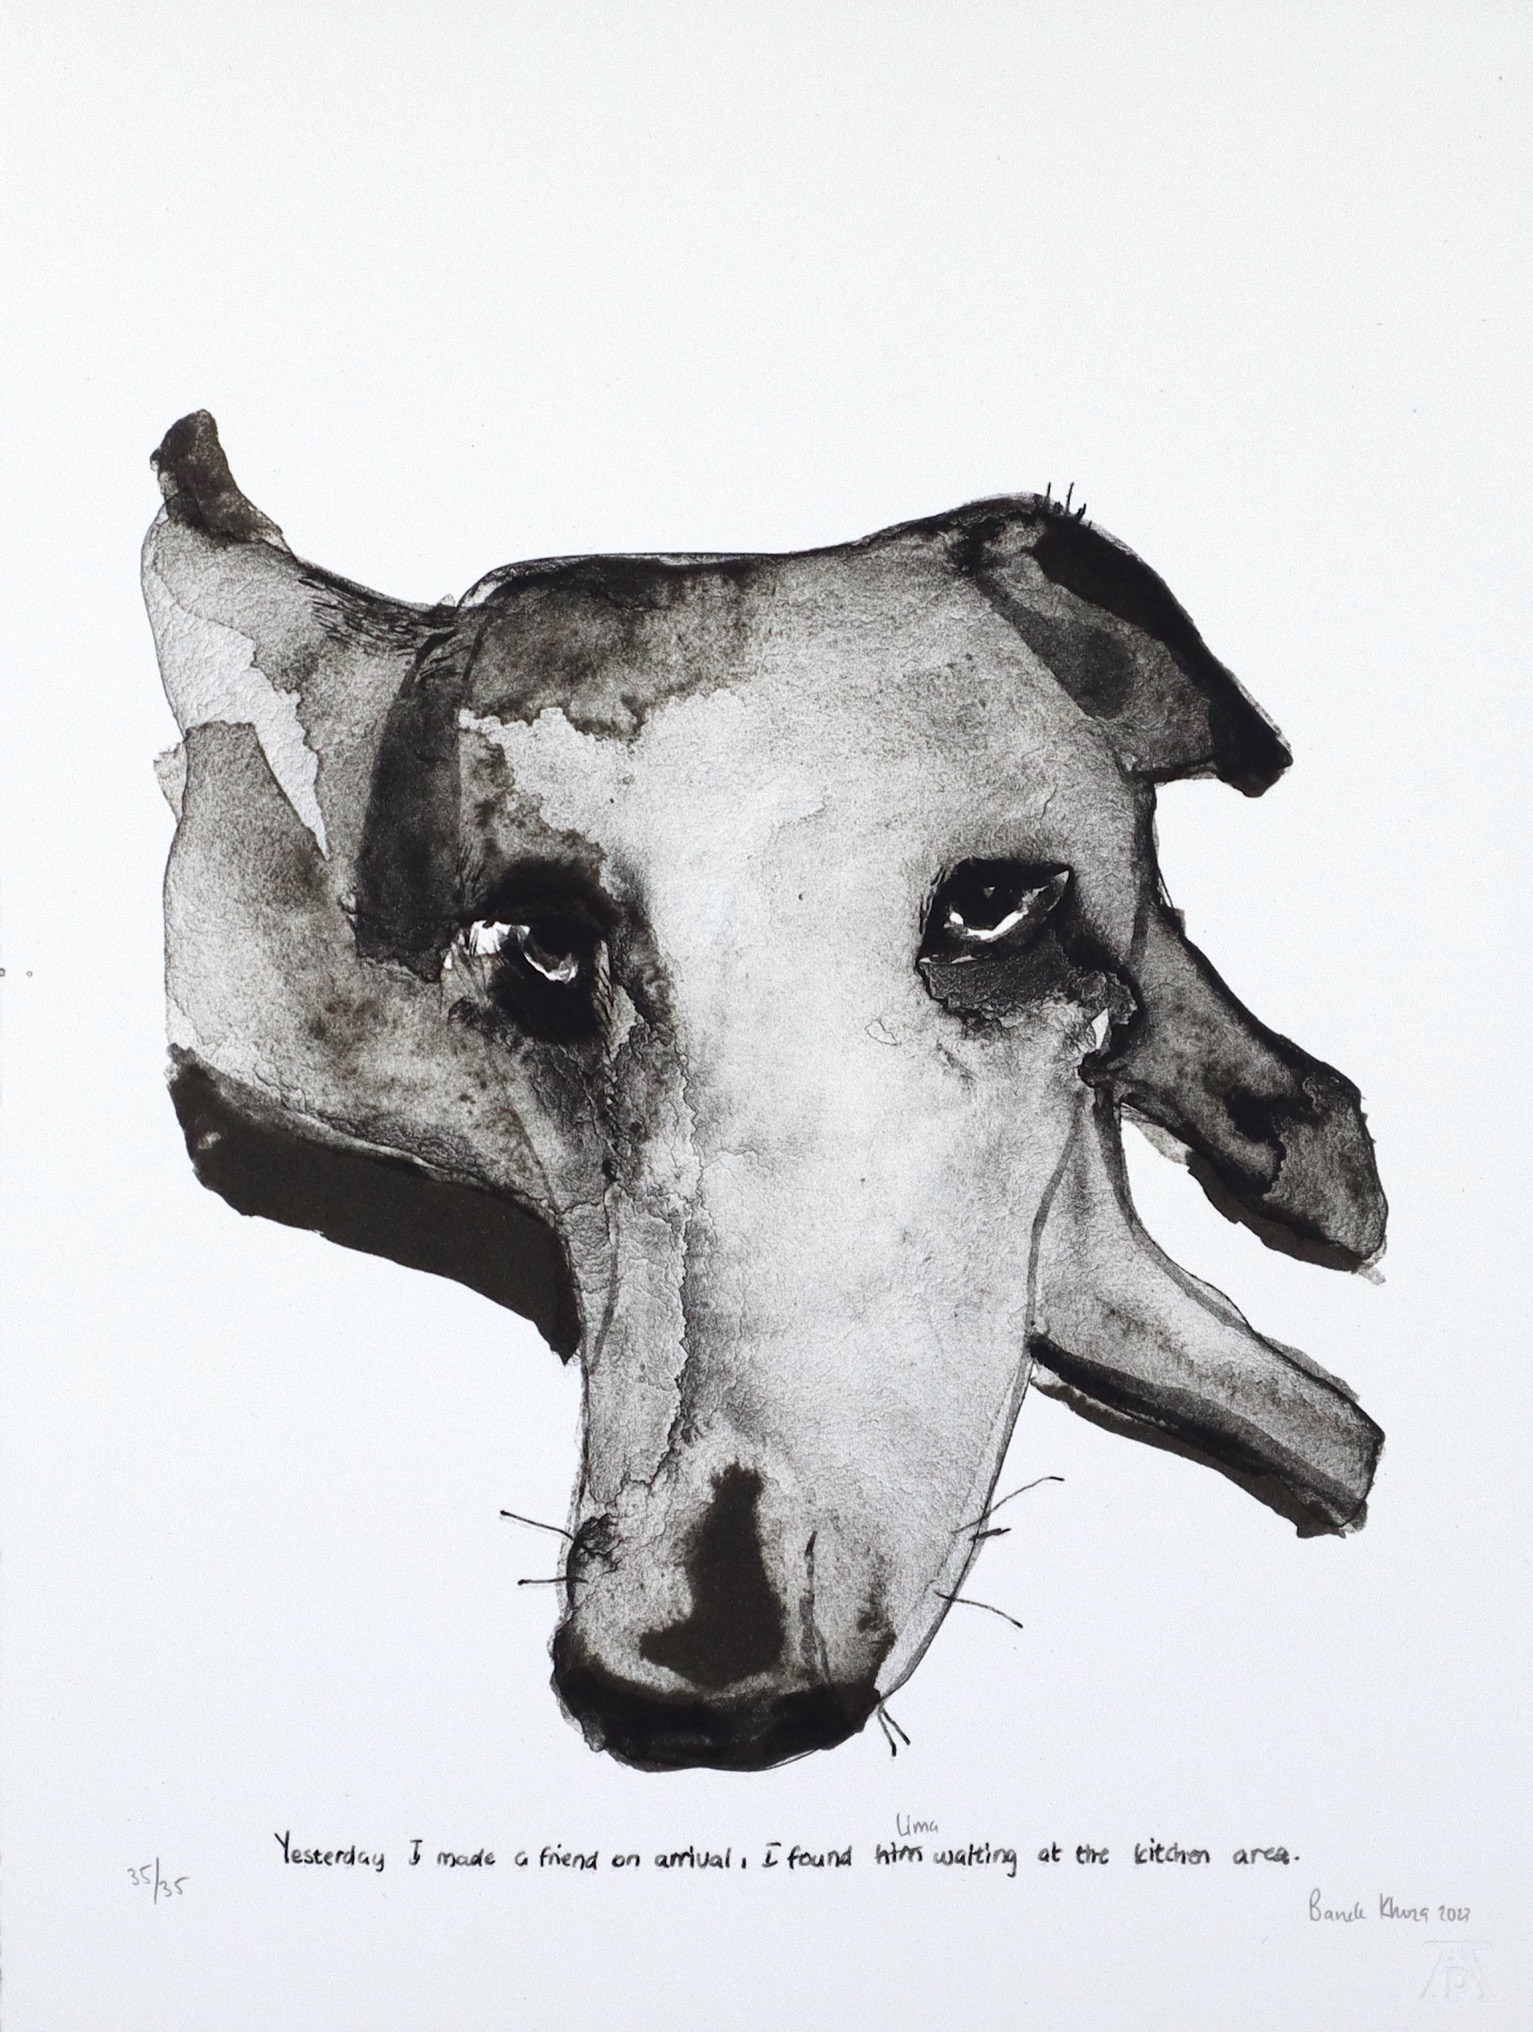 Banele Khoza lithograph of dog Lima